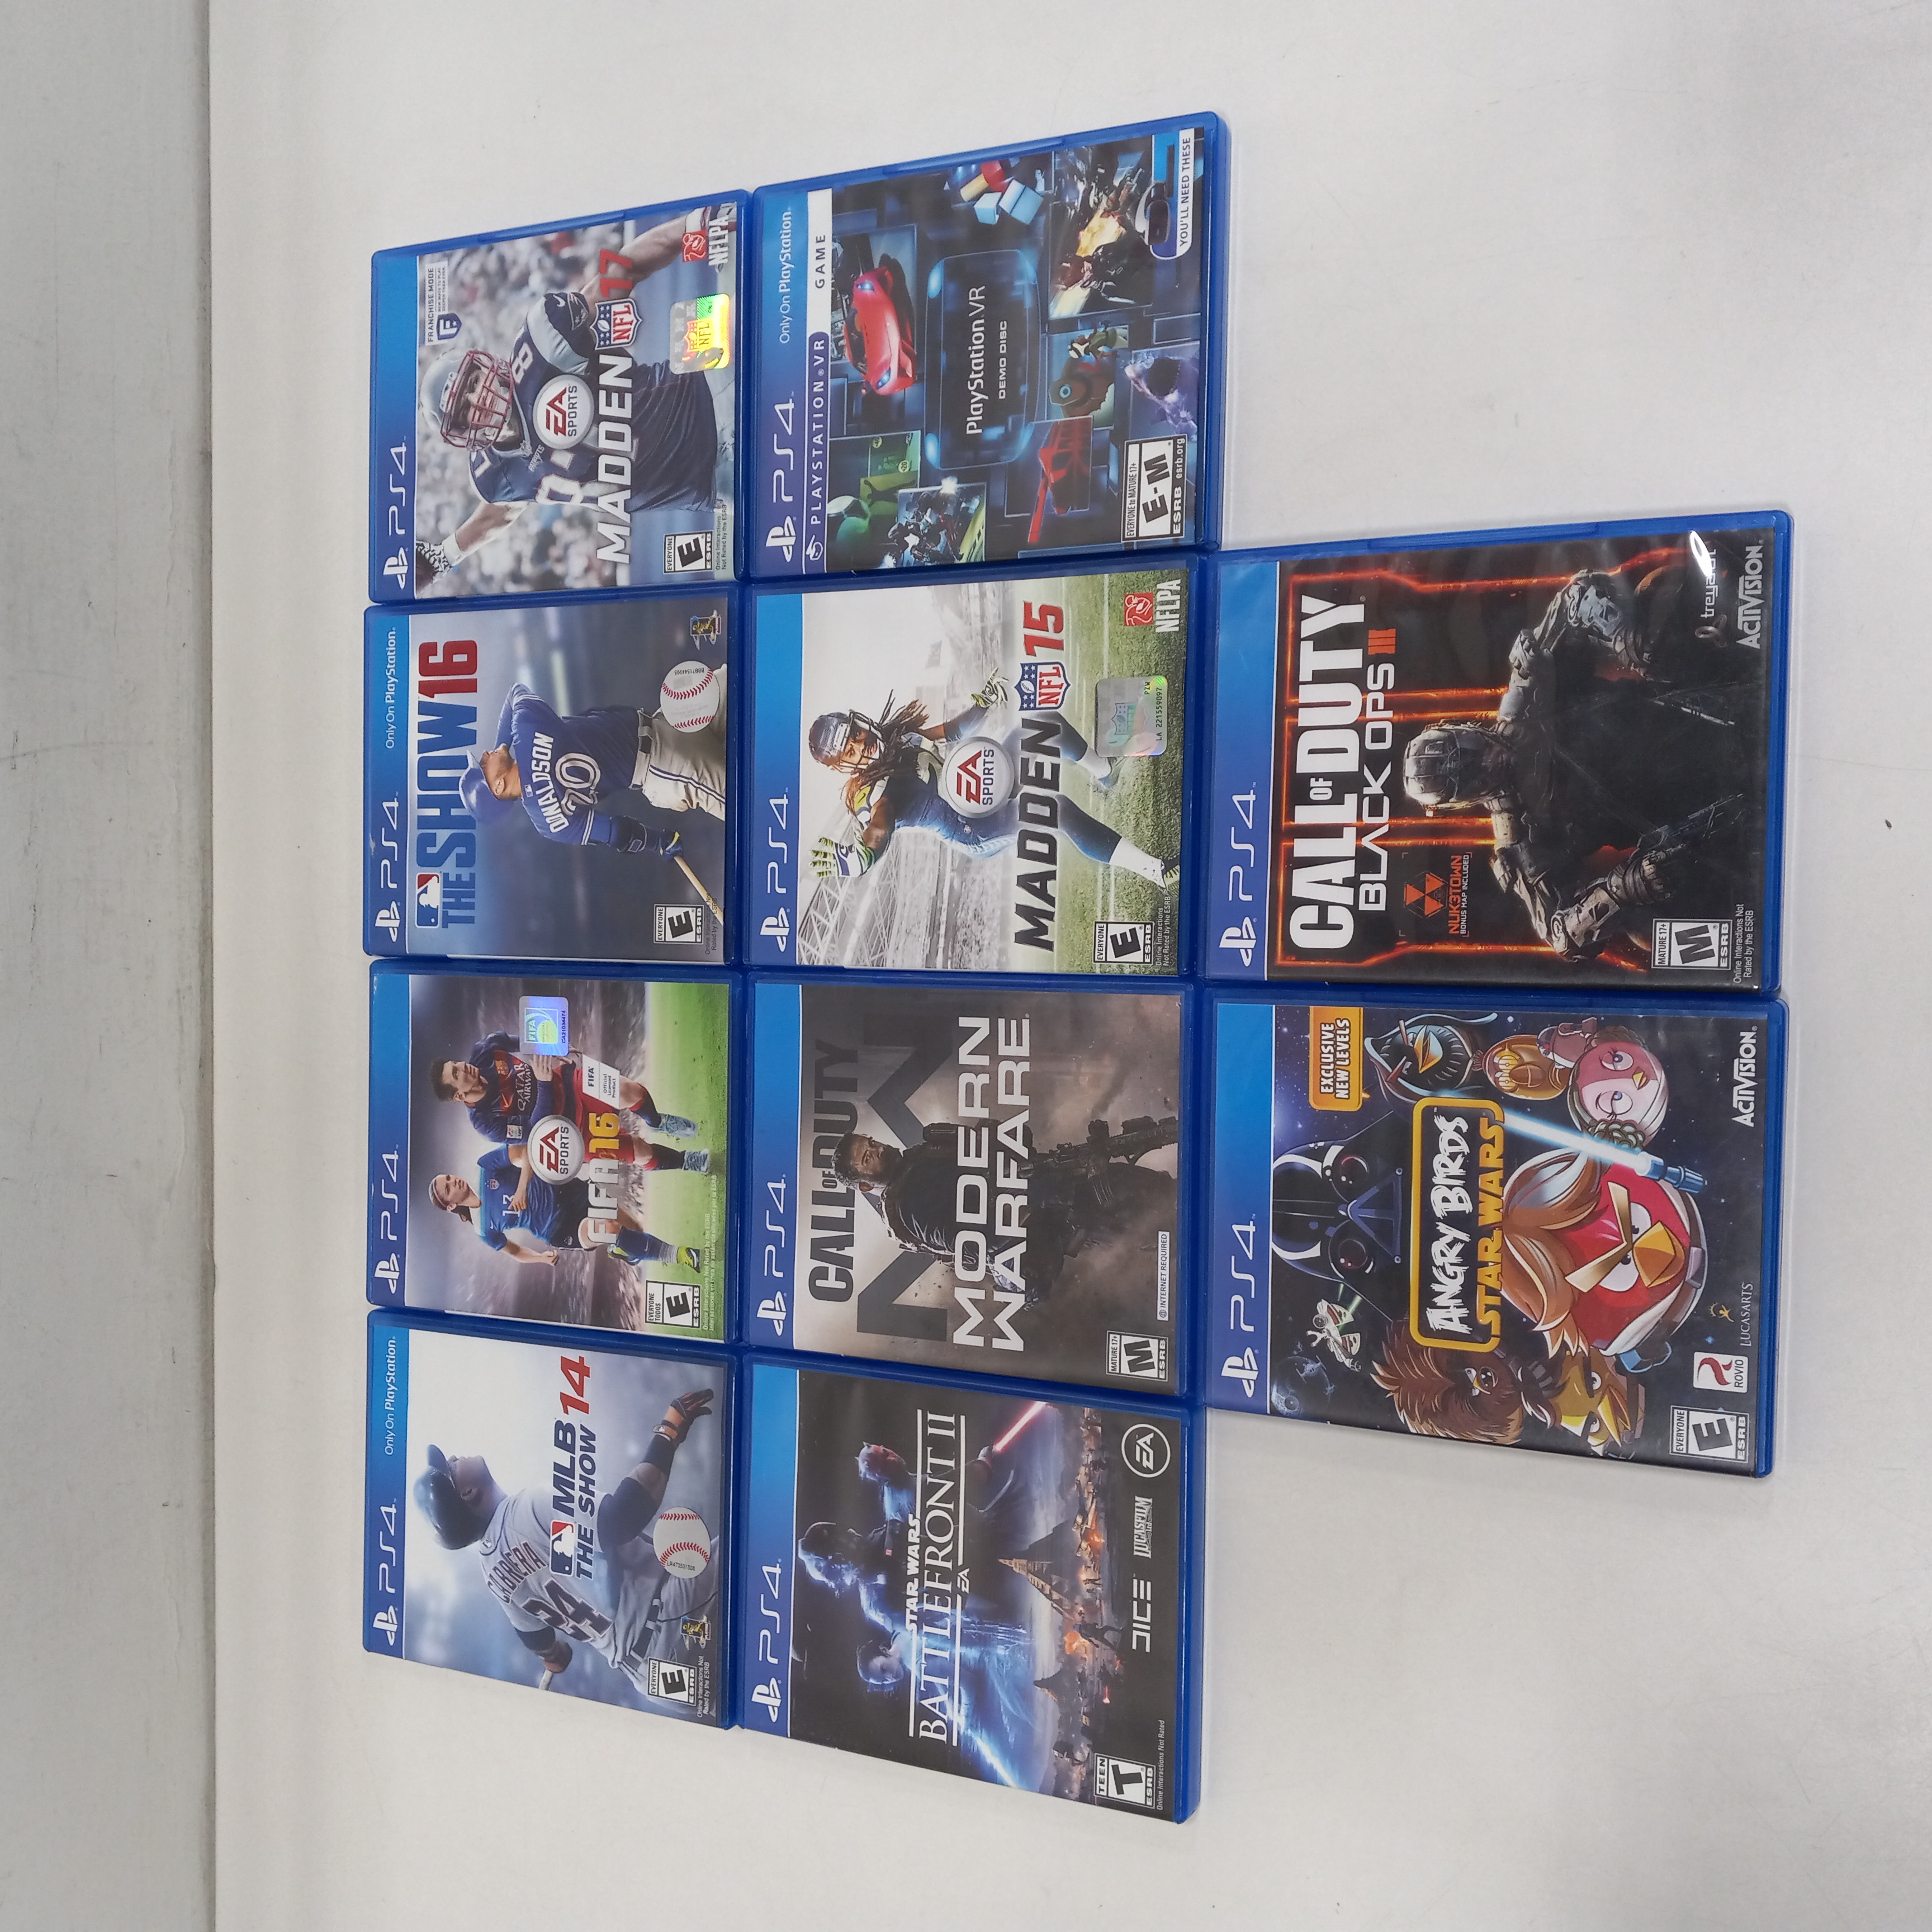 Lote - 10 jogos em mídia física - PS4 e XBOX (Tudo Impecável) - Videogames  - Continental, Osasco 1257432765